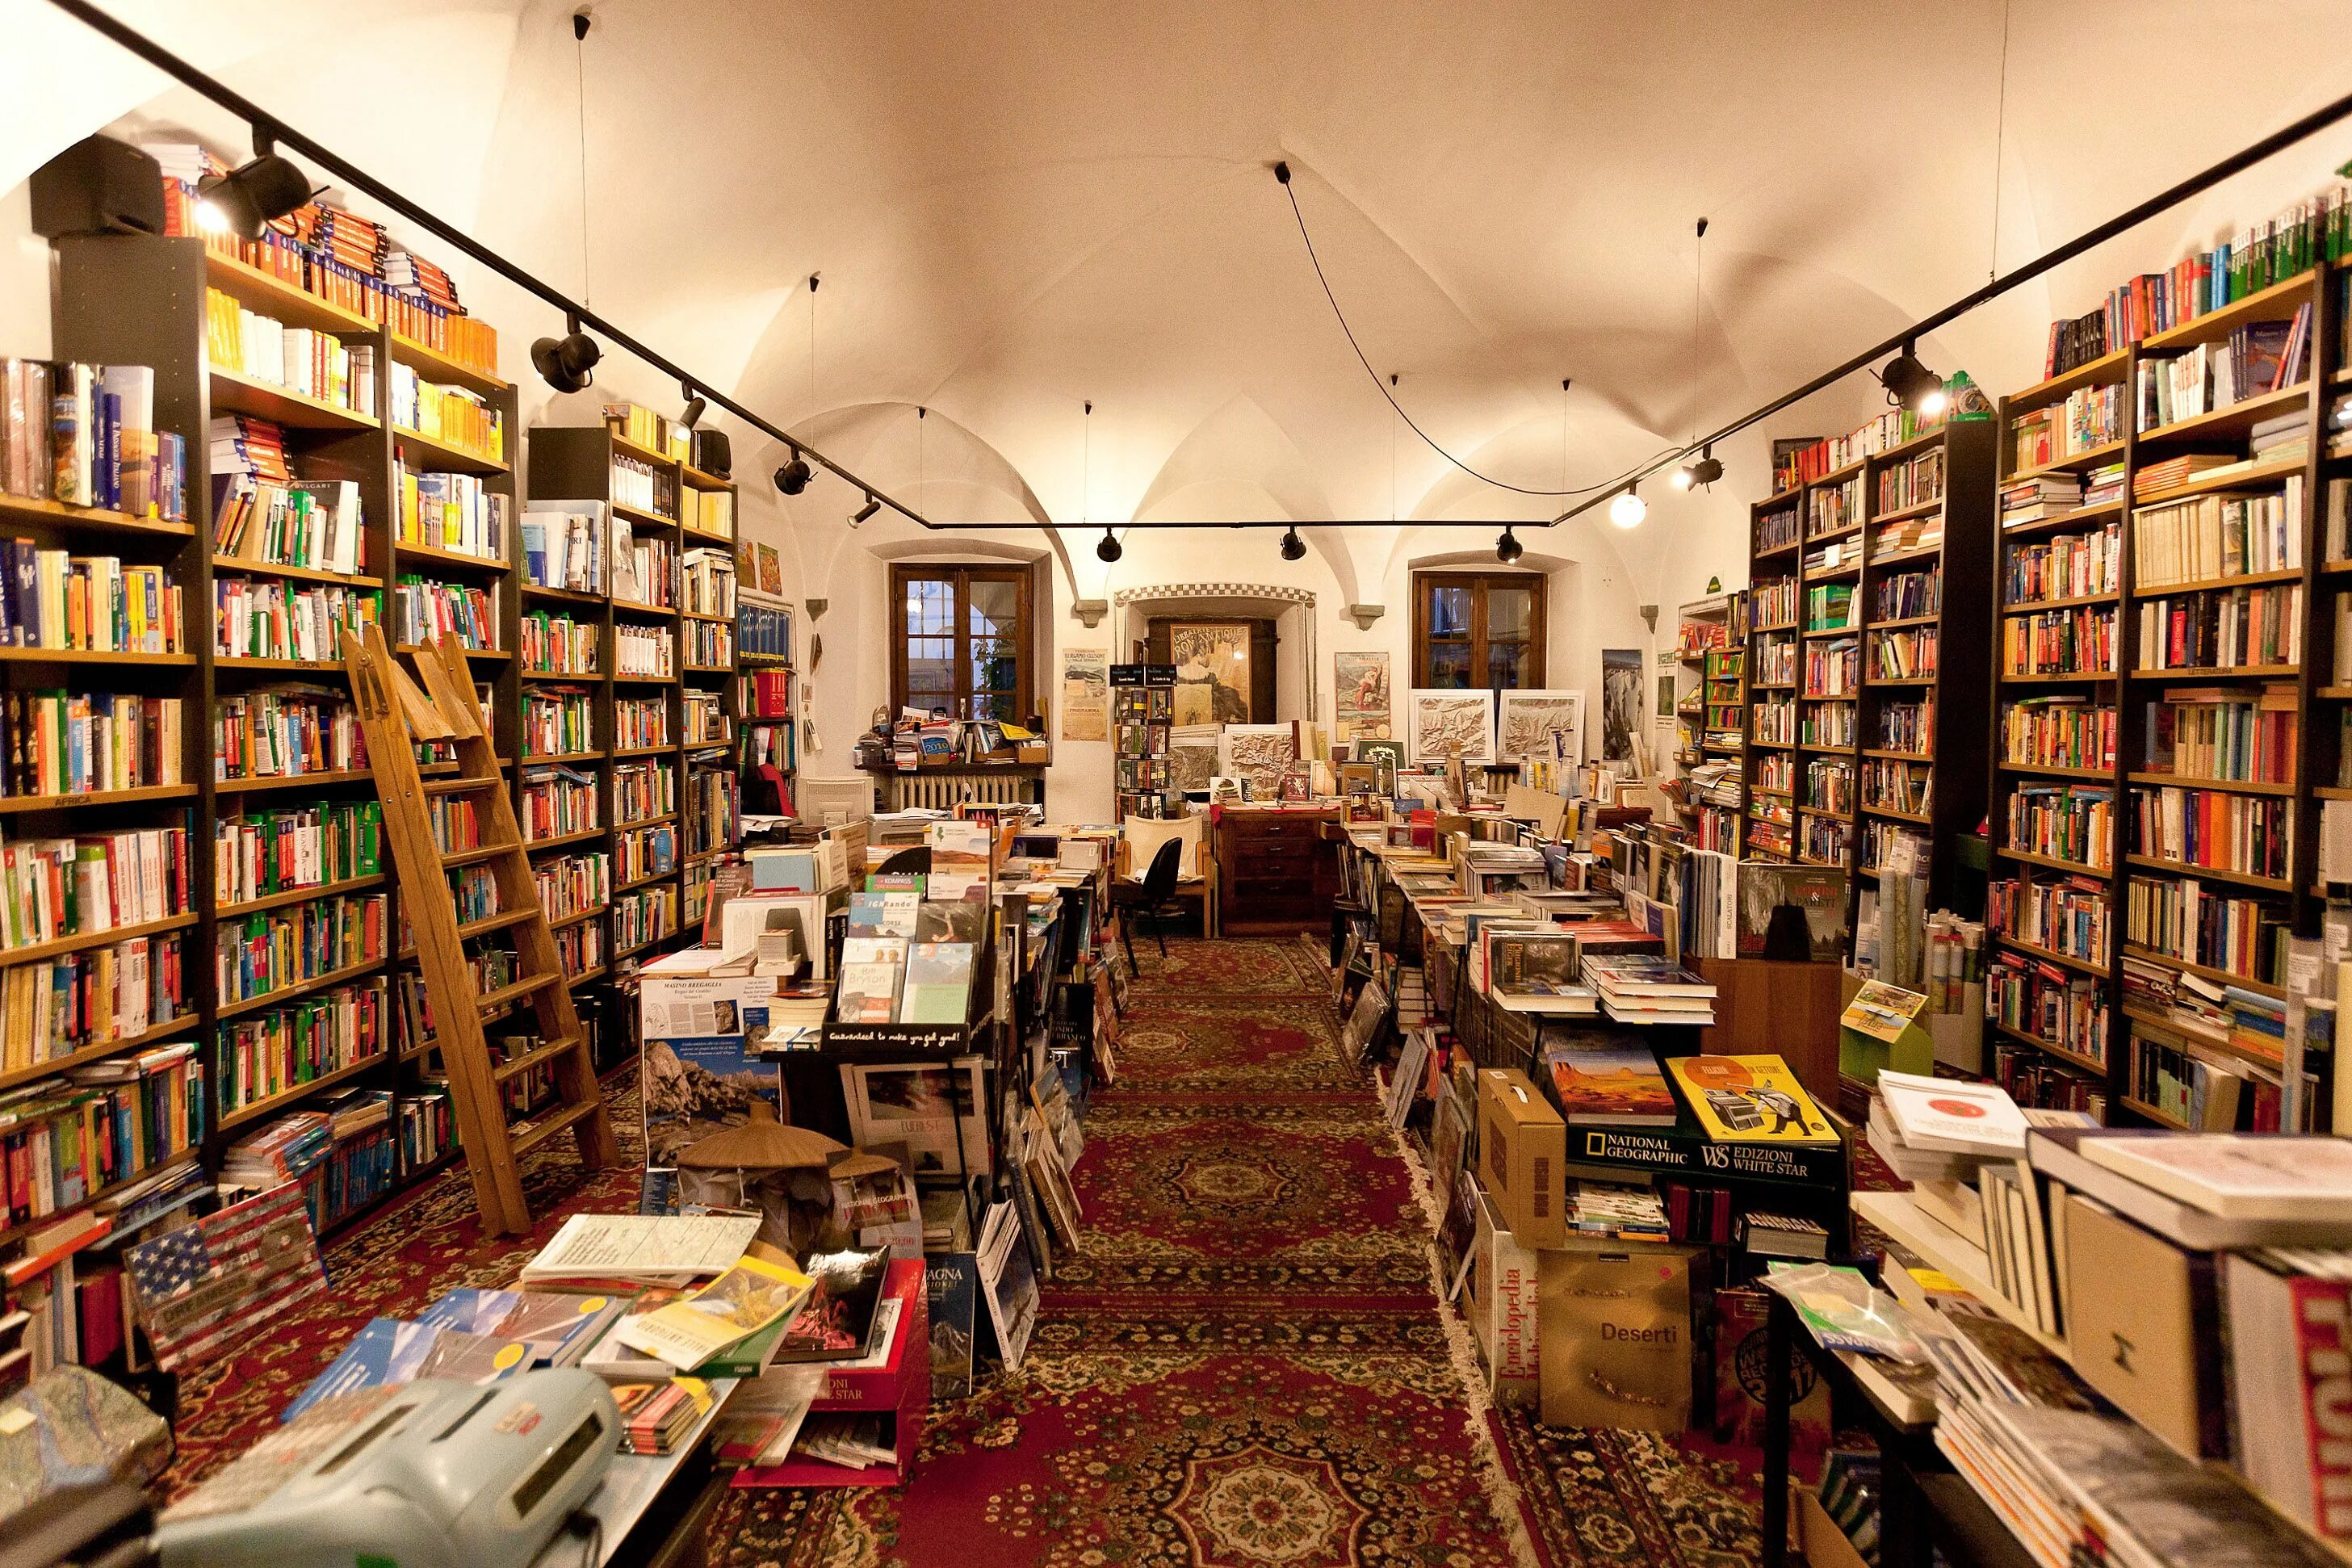 Libreria магазин. Италия книжный рынок. Bookshop (bookstore). Bookshop / bookstore - book. The books in this shop are